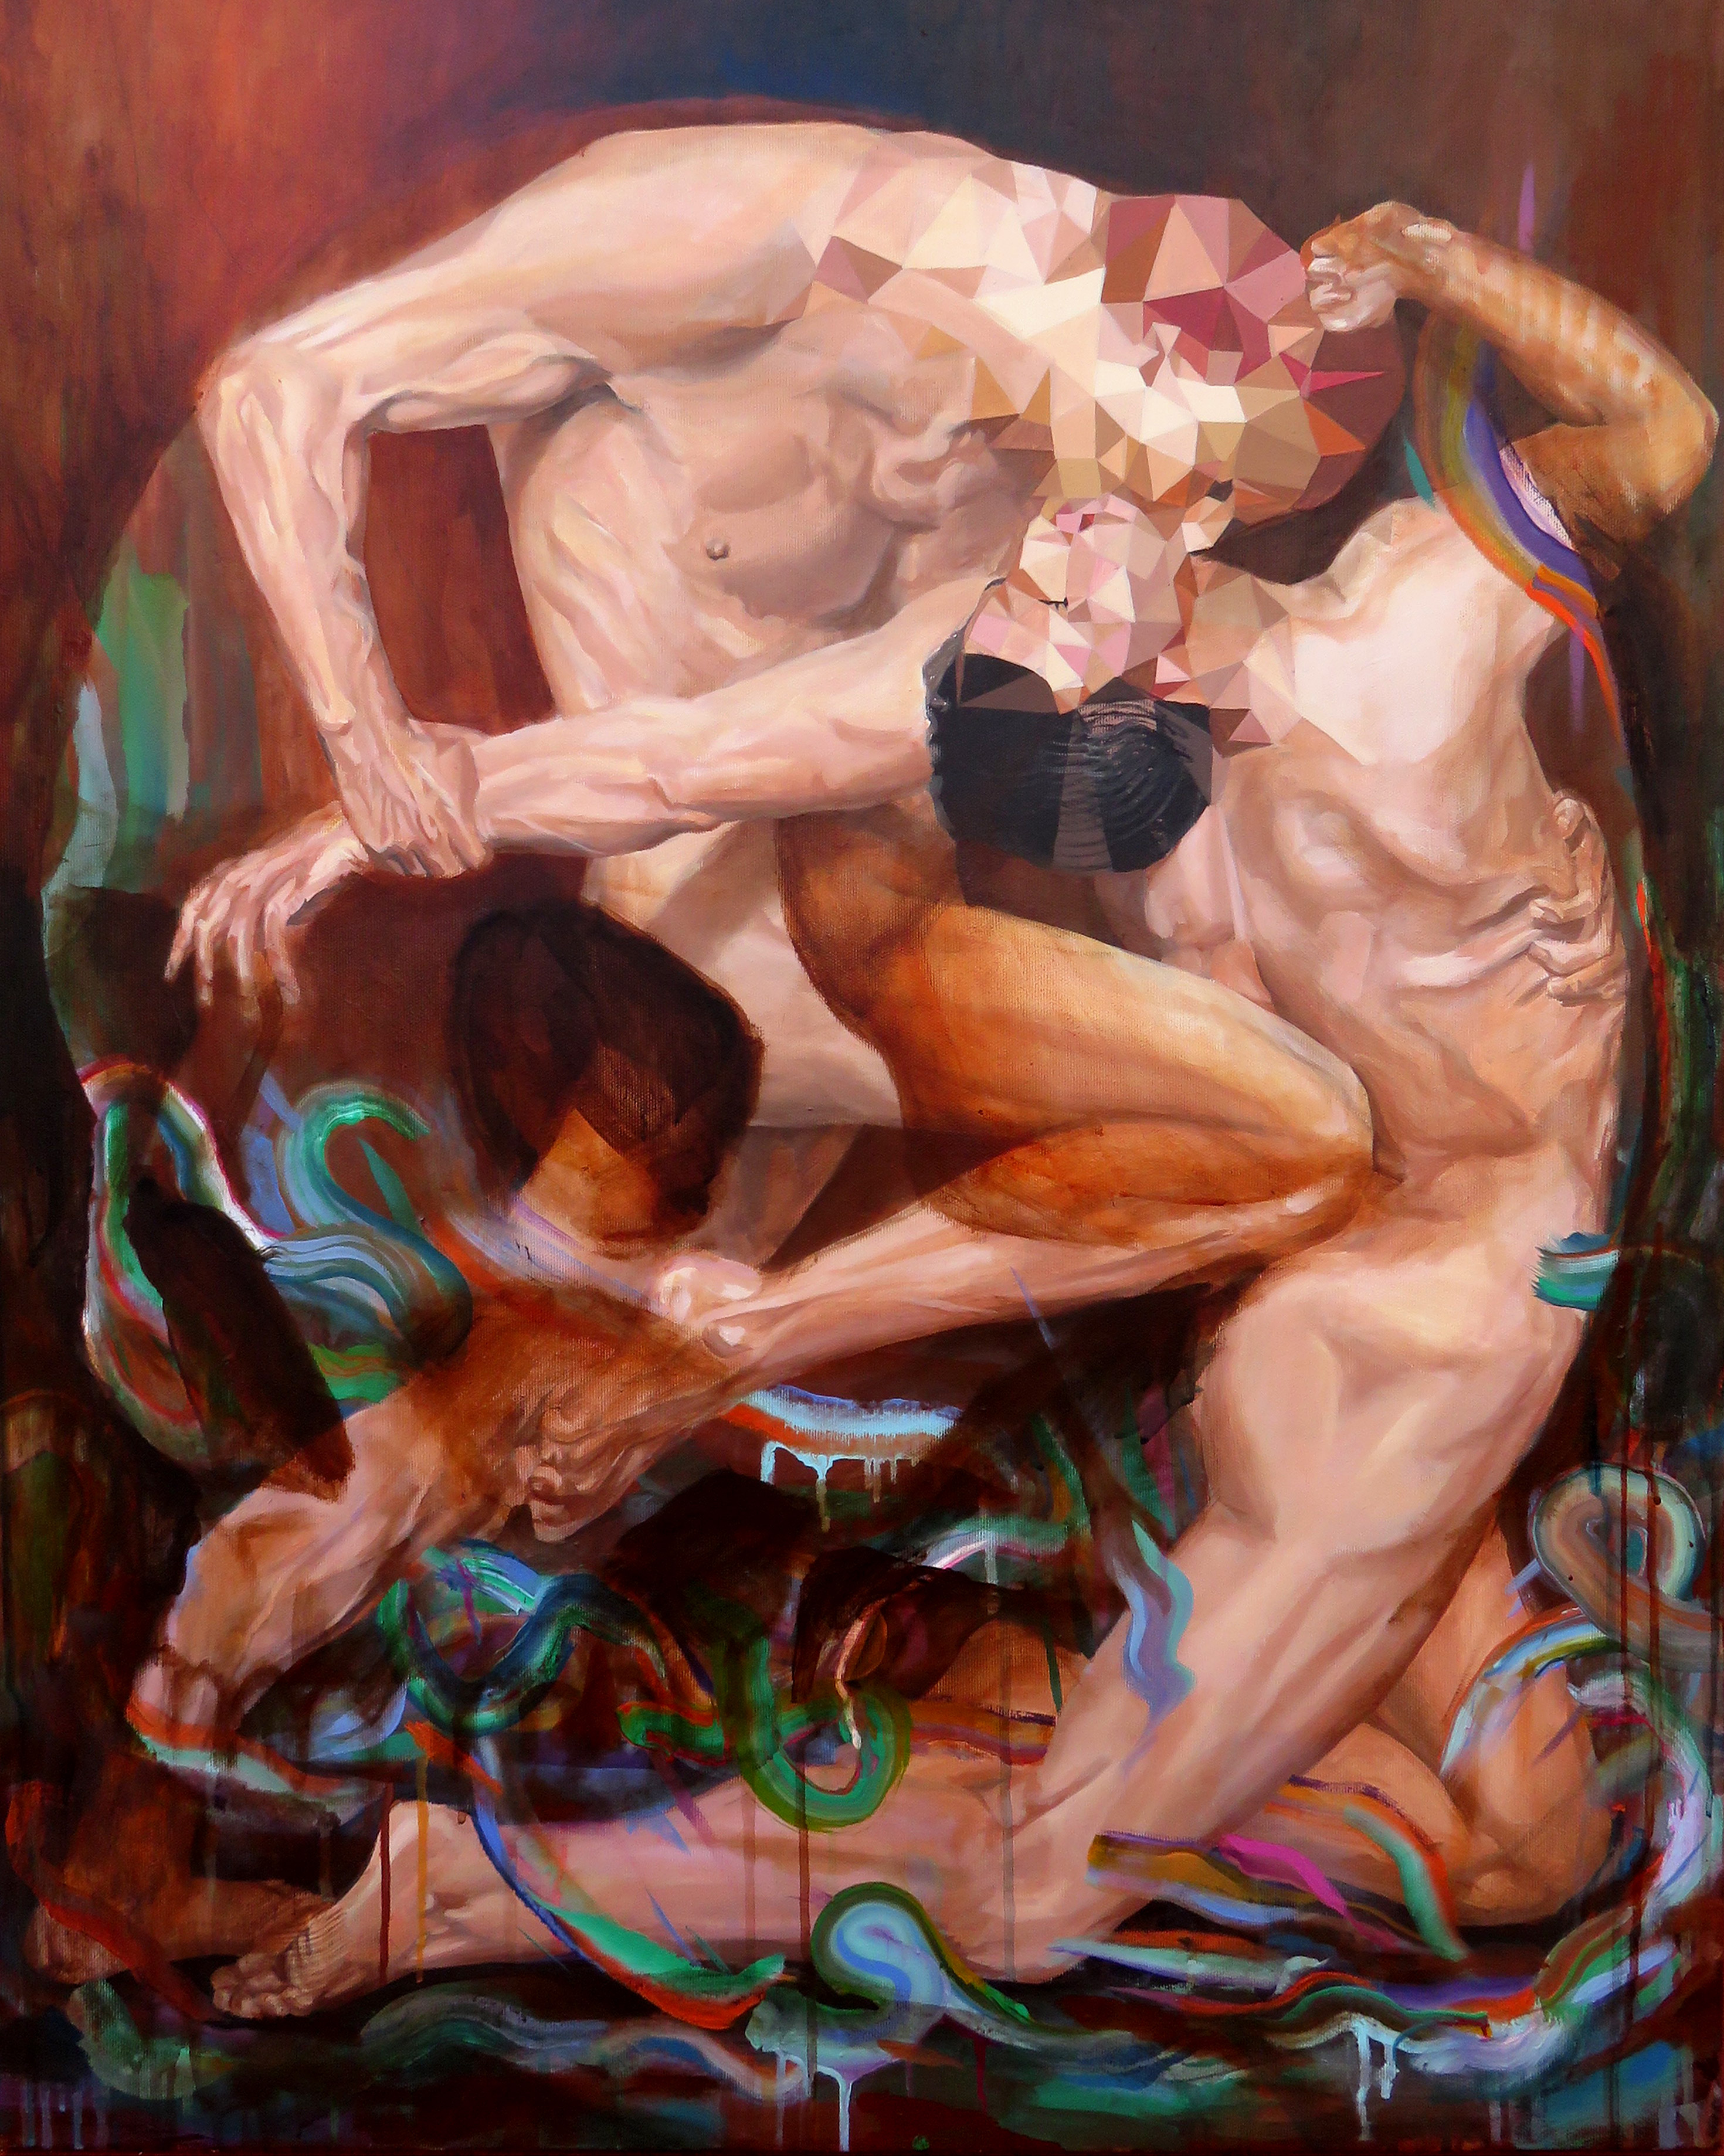 Acrylic on canvas painting of Dante & Virgilio Skull by Uriginal. 2016 Barcelona